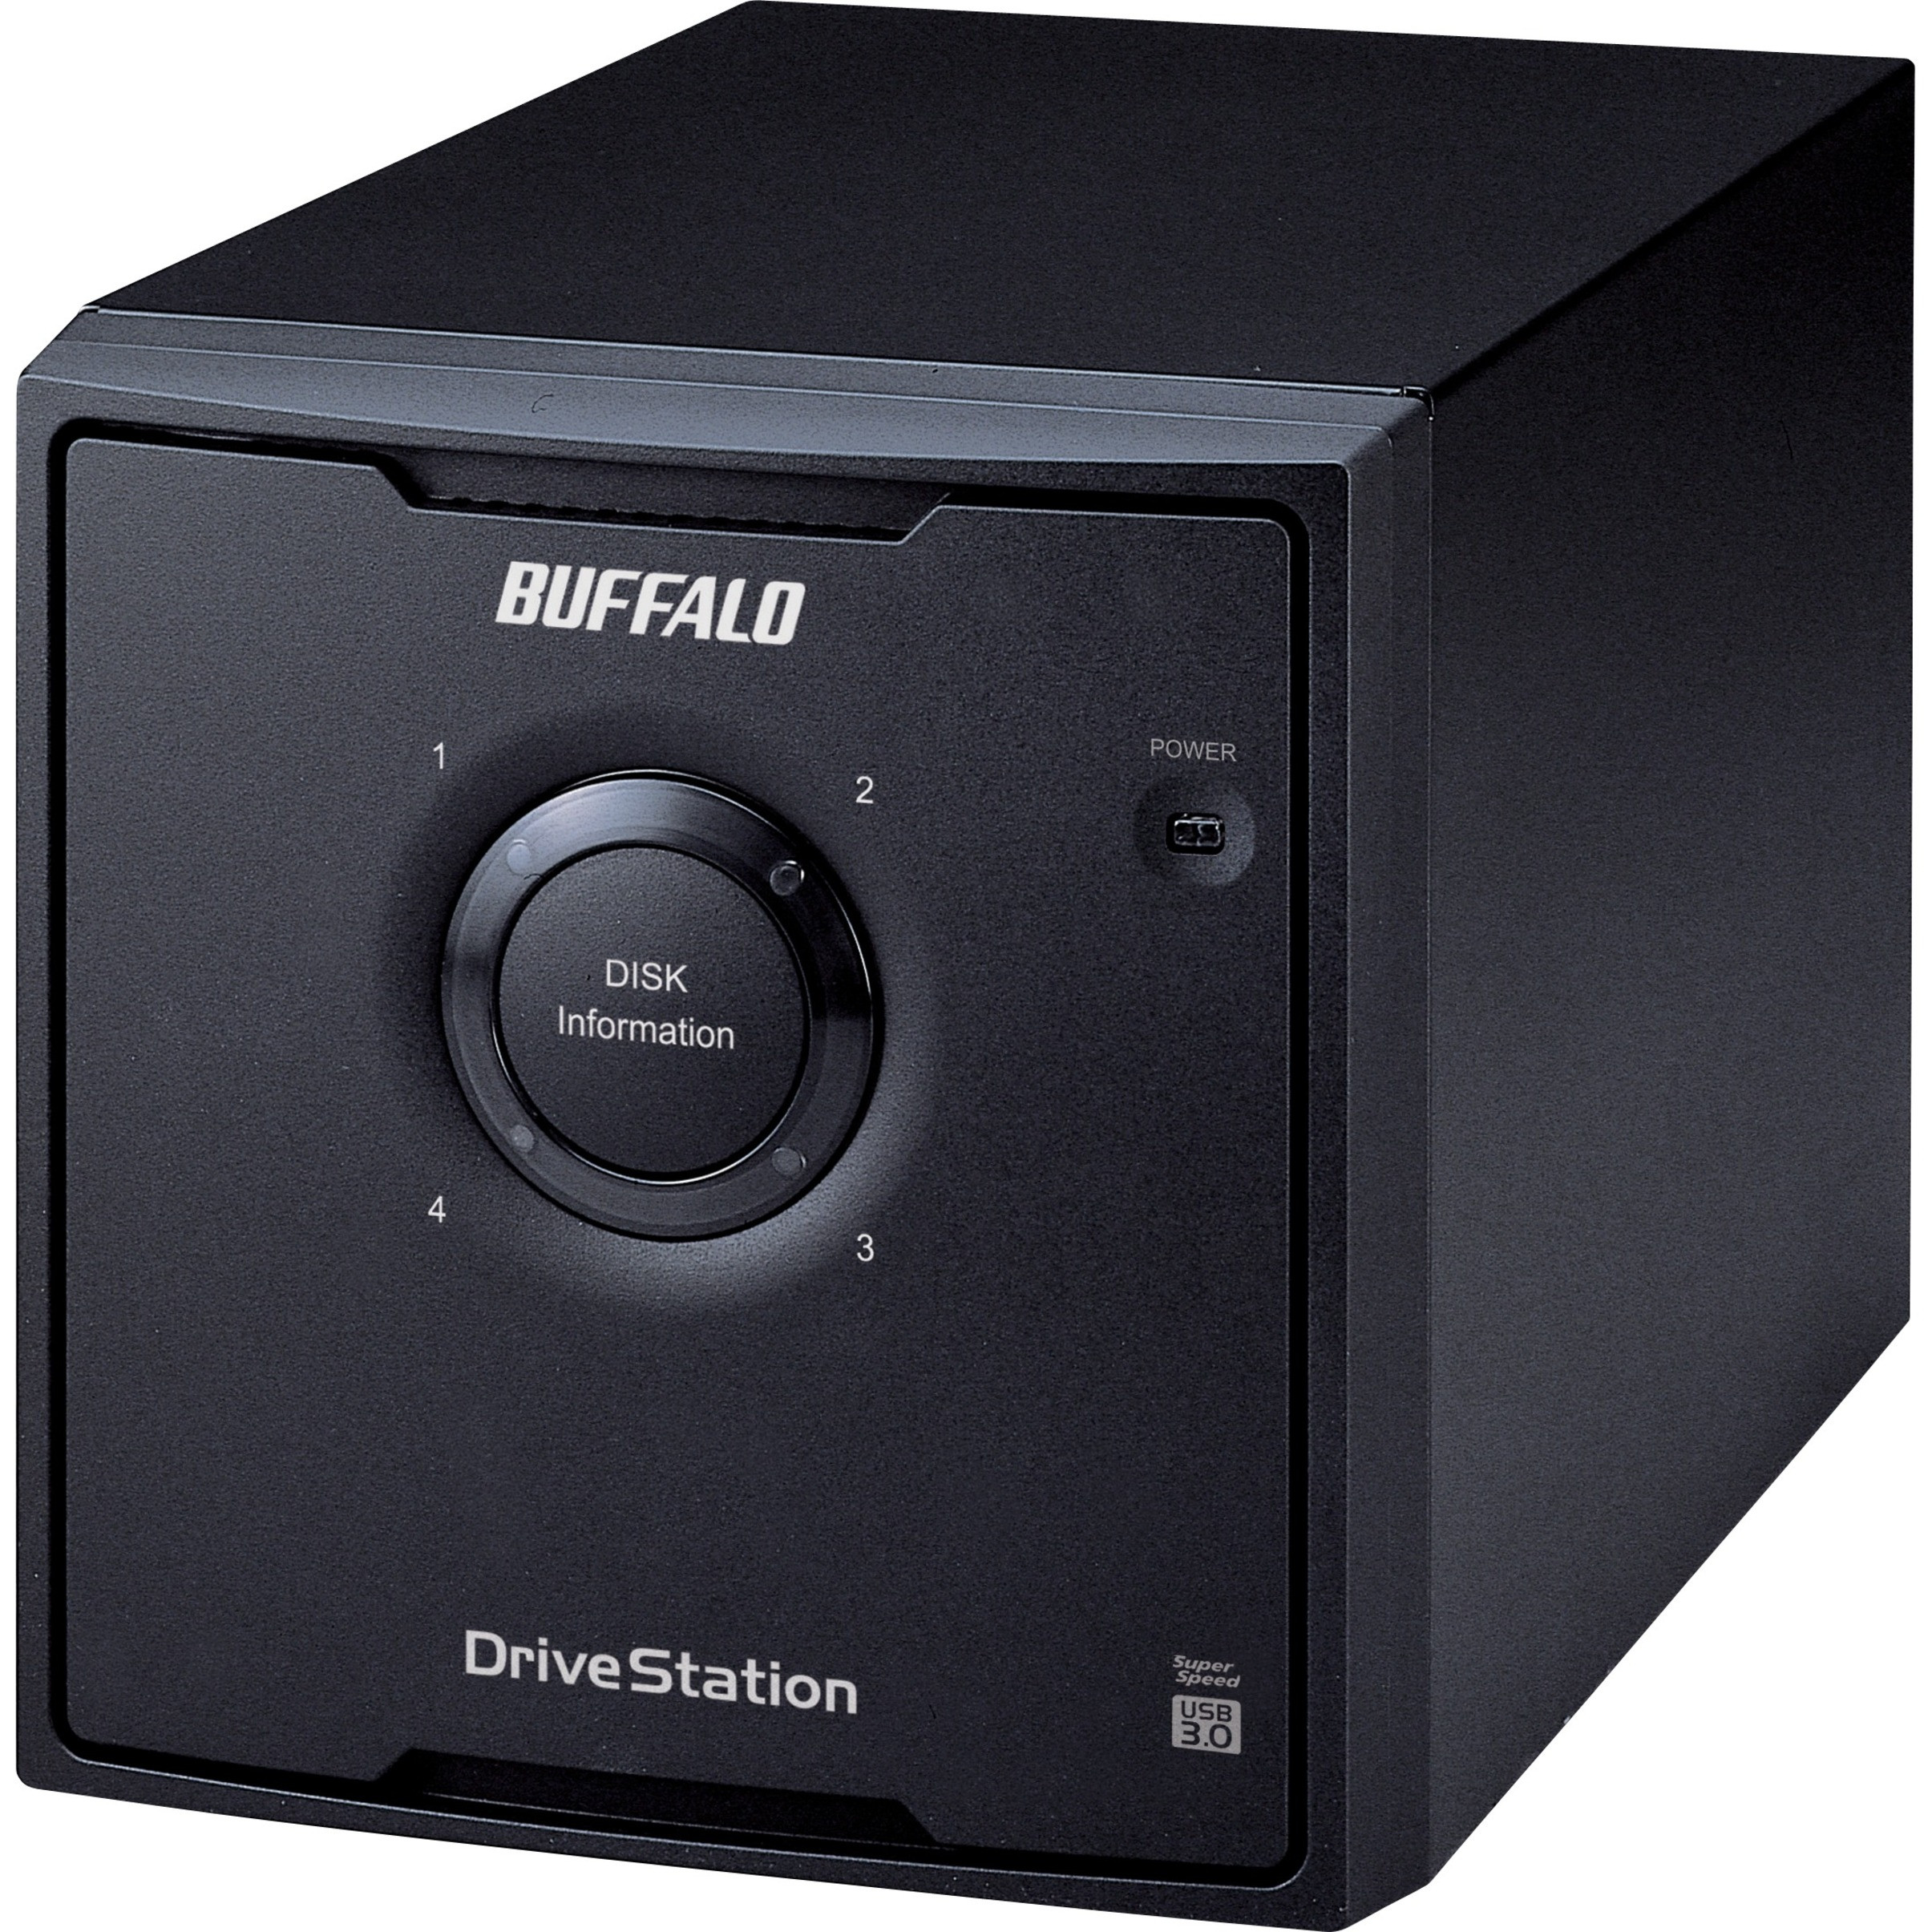 salat Kategori Abundantly Buffalo Technology DriveStation Quad USB 3.0 4-Drive 16 TB Desktop DAS  (HD-QH16TU3R5)USB 3.0SATARAID JBOD/0/1/5/104 x 4 TB Drives Installe...  HD-QH16TU3R5 - Corporate Armor